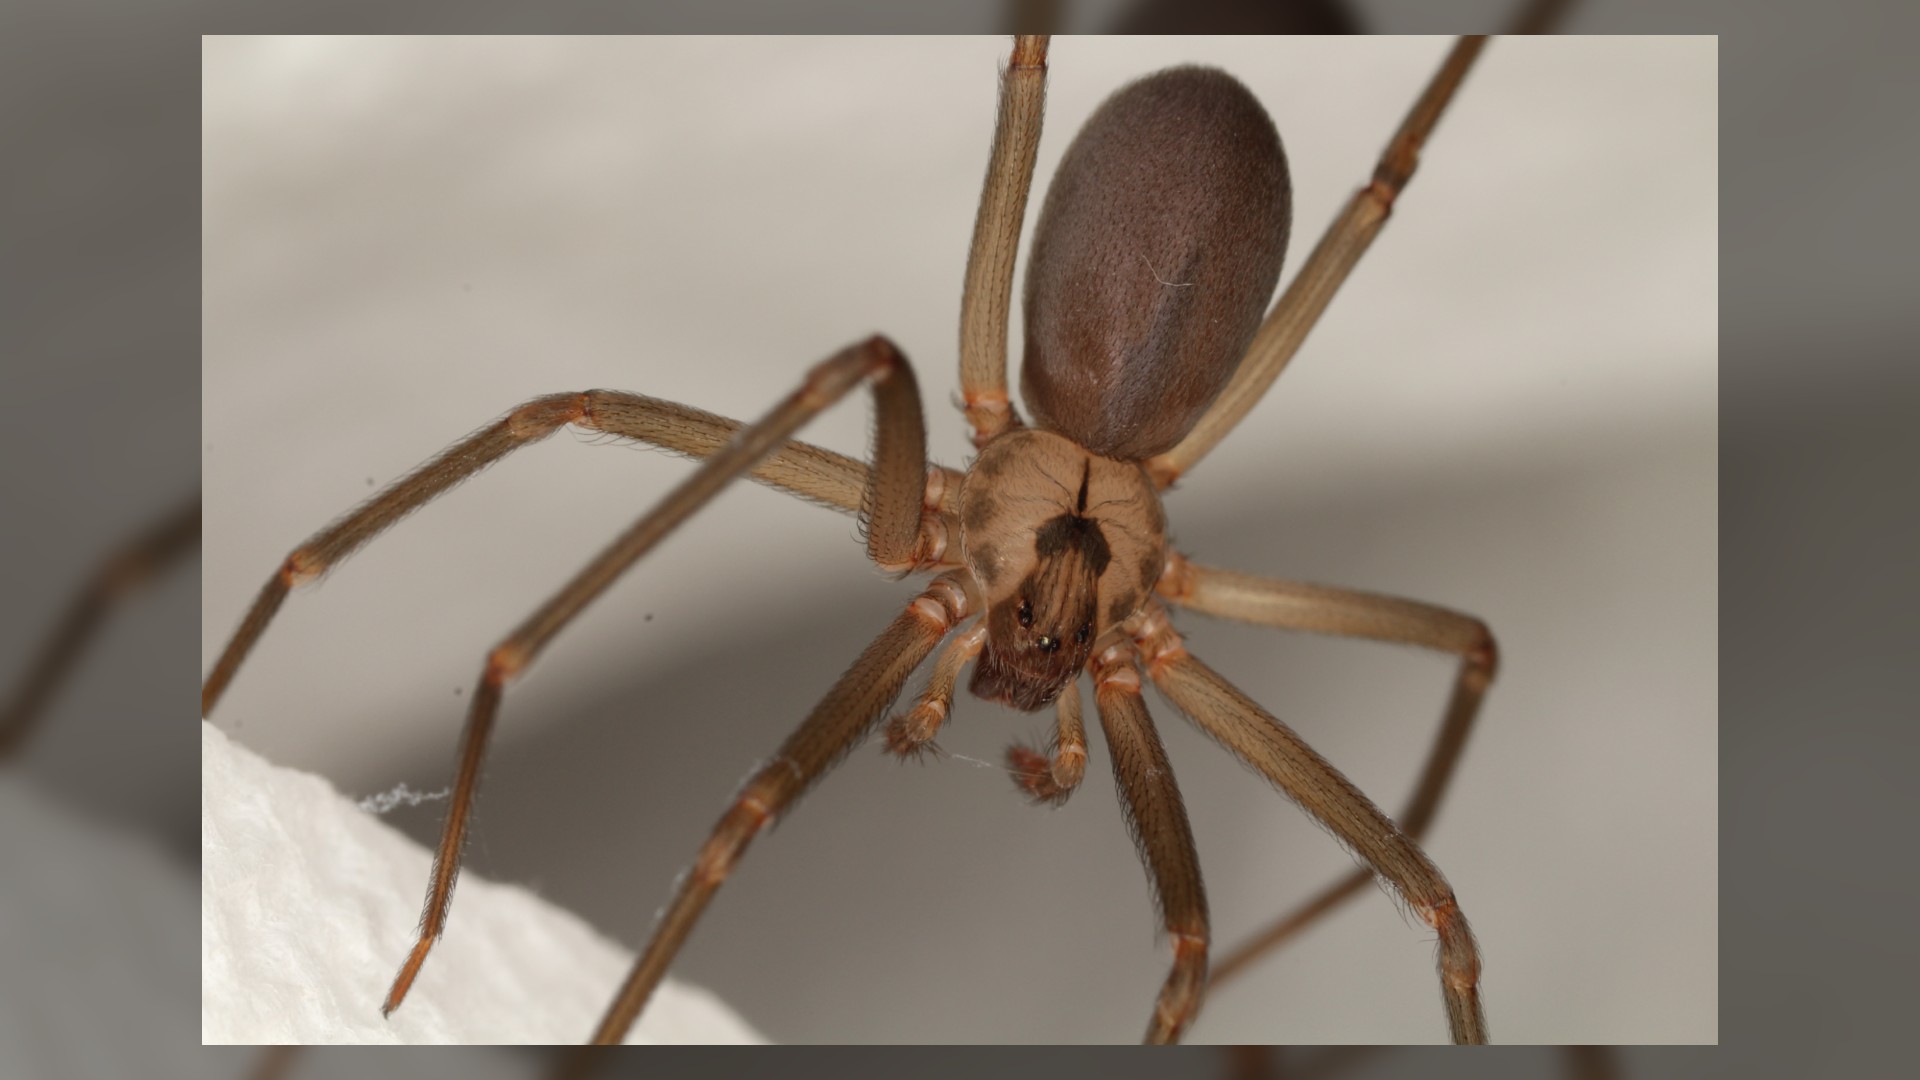 Brown Recluse Spider_Nick626 via Shutterstock